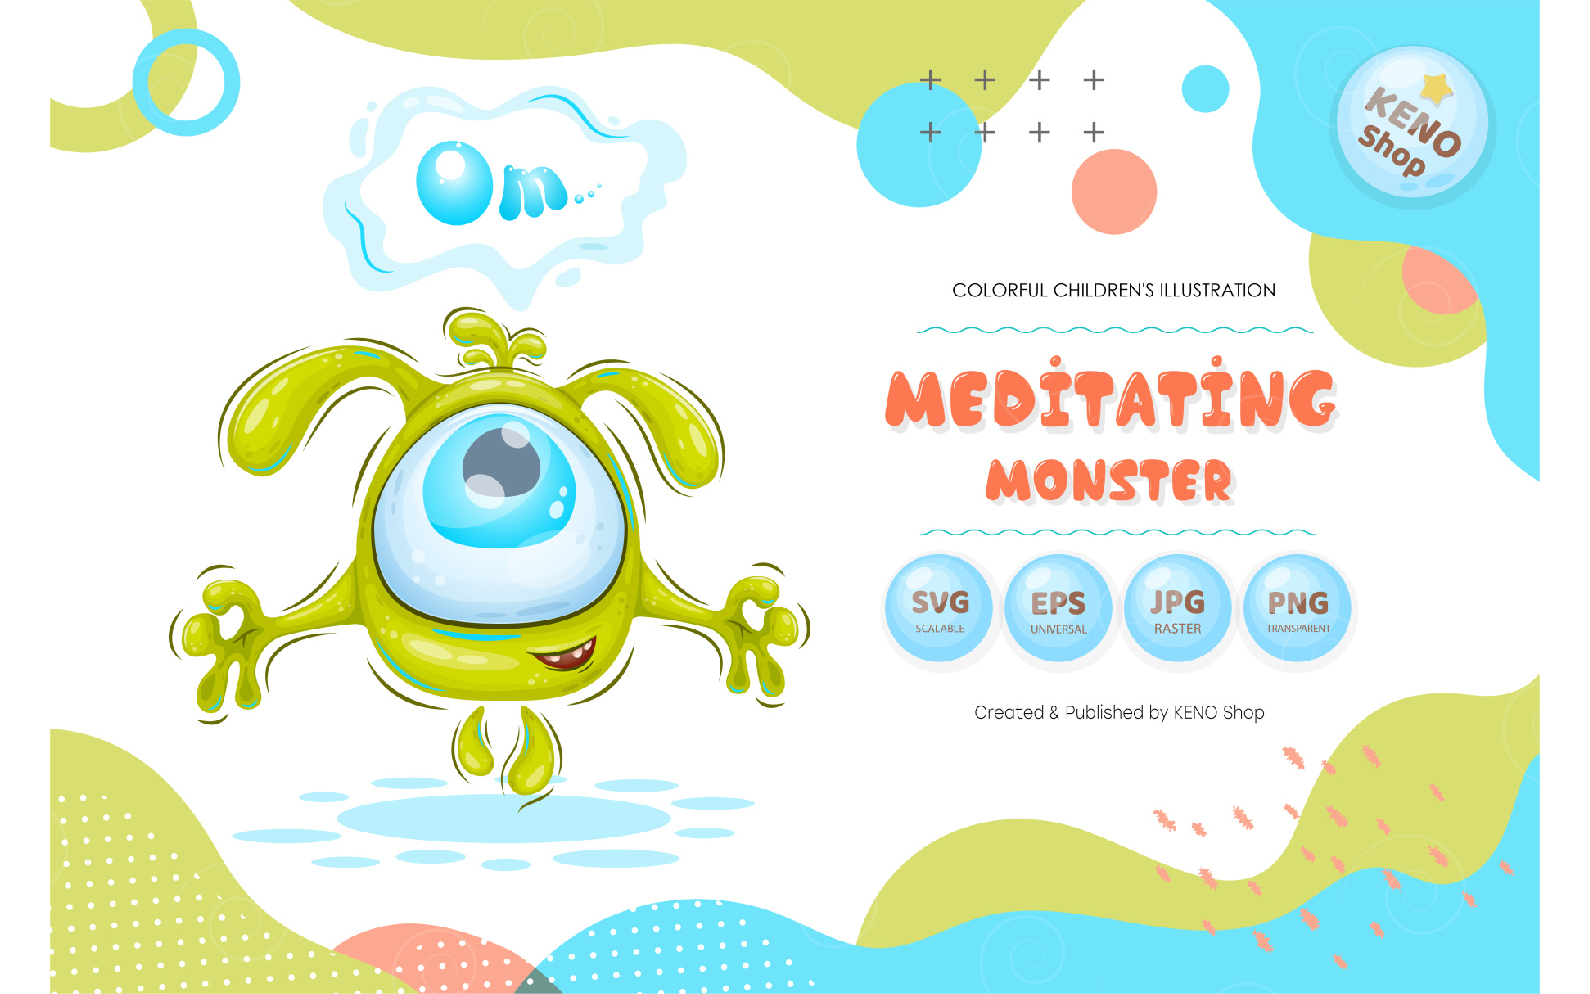 Meditating monster - Vector Image